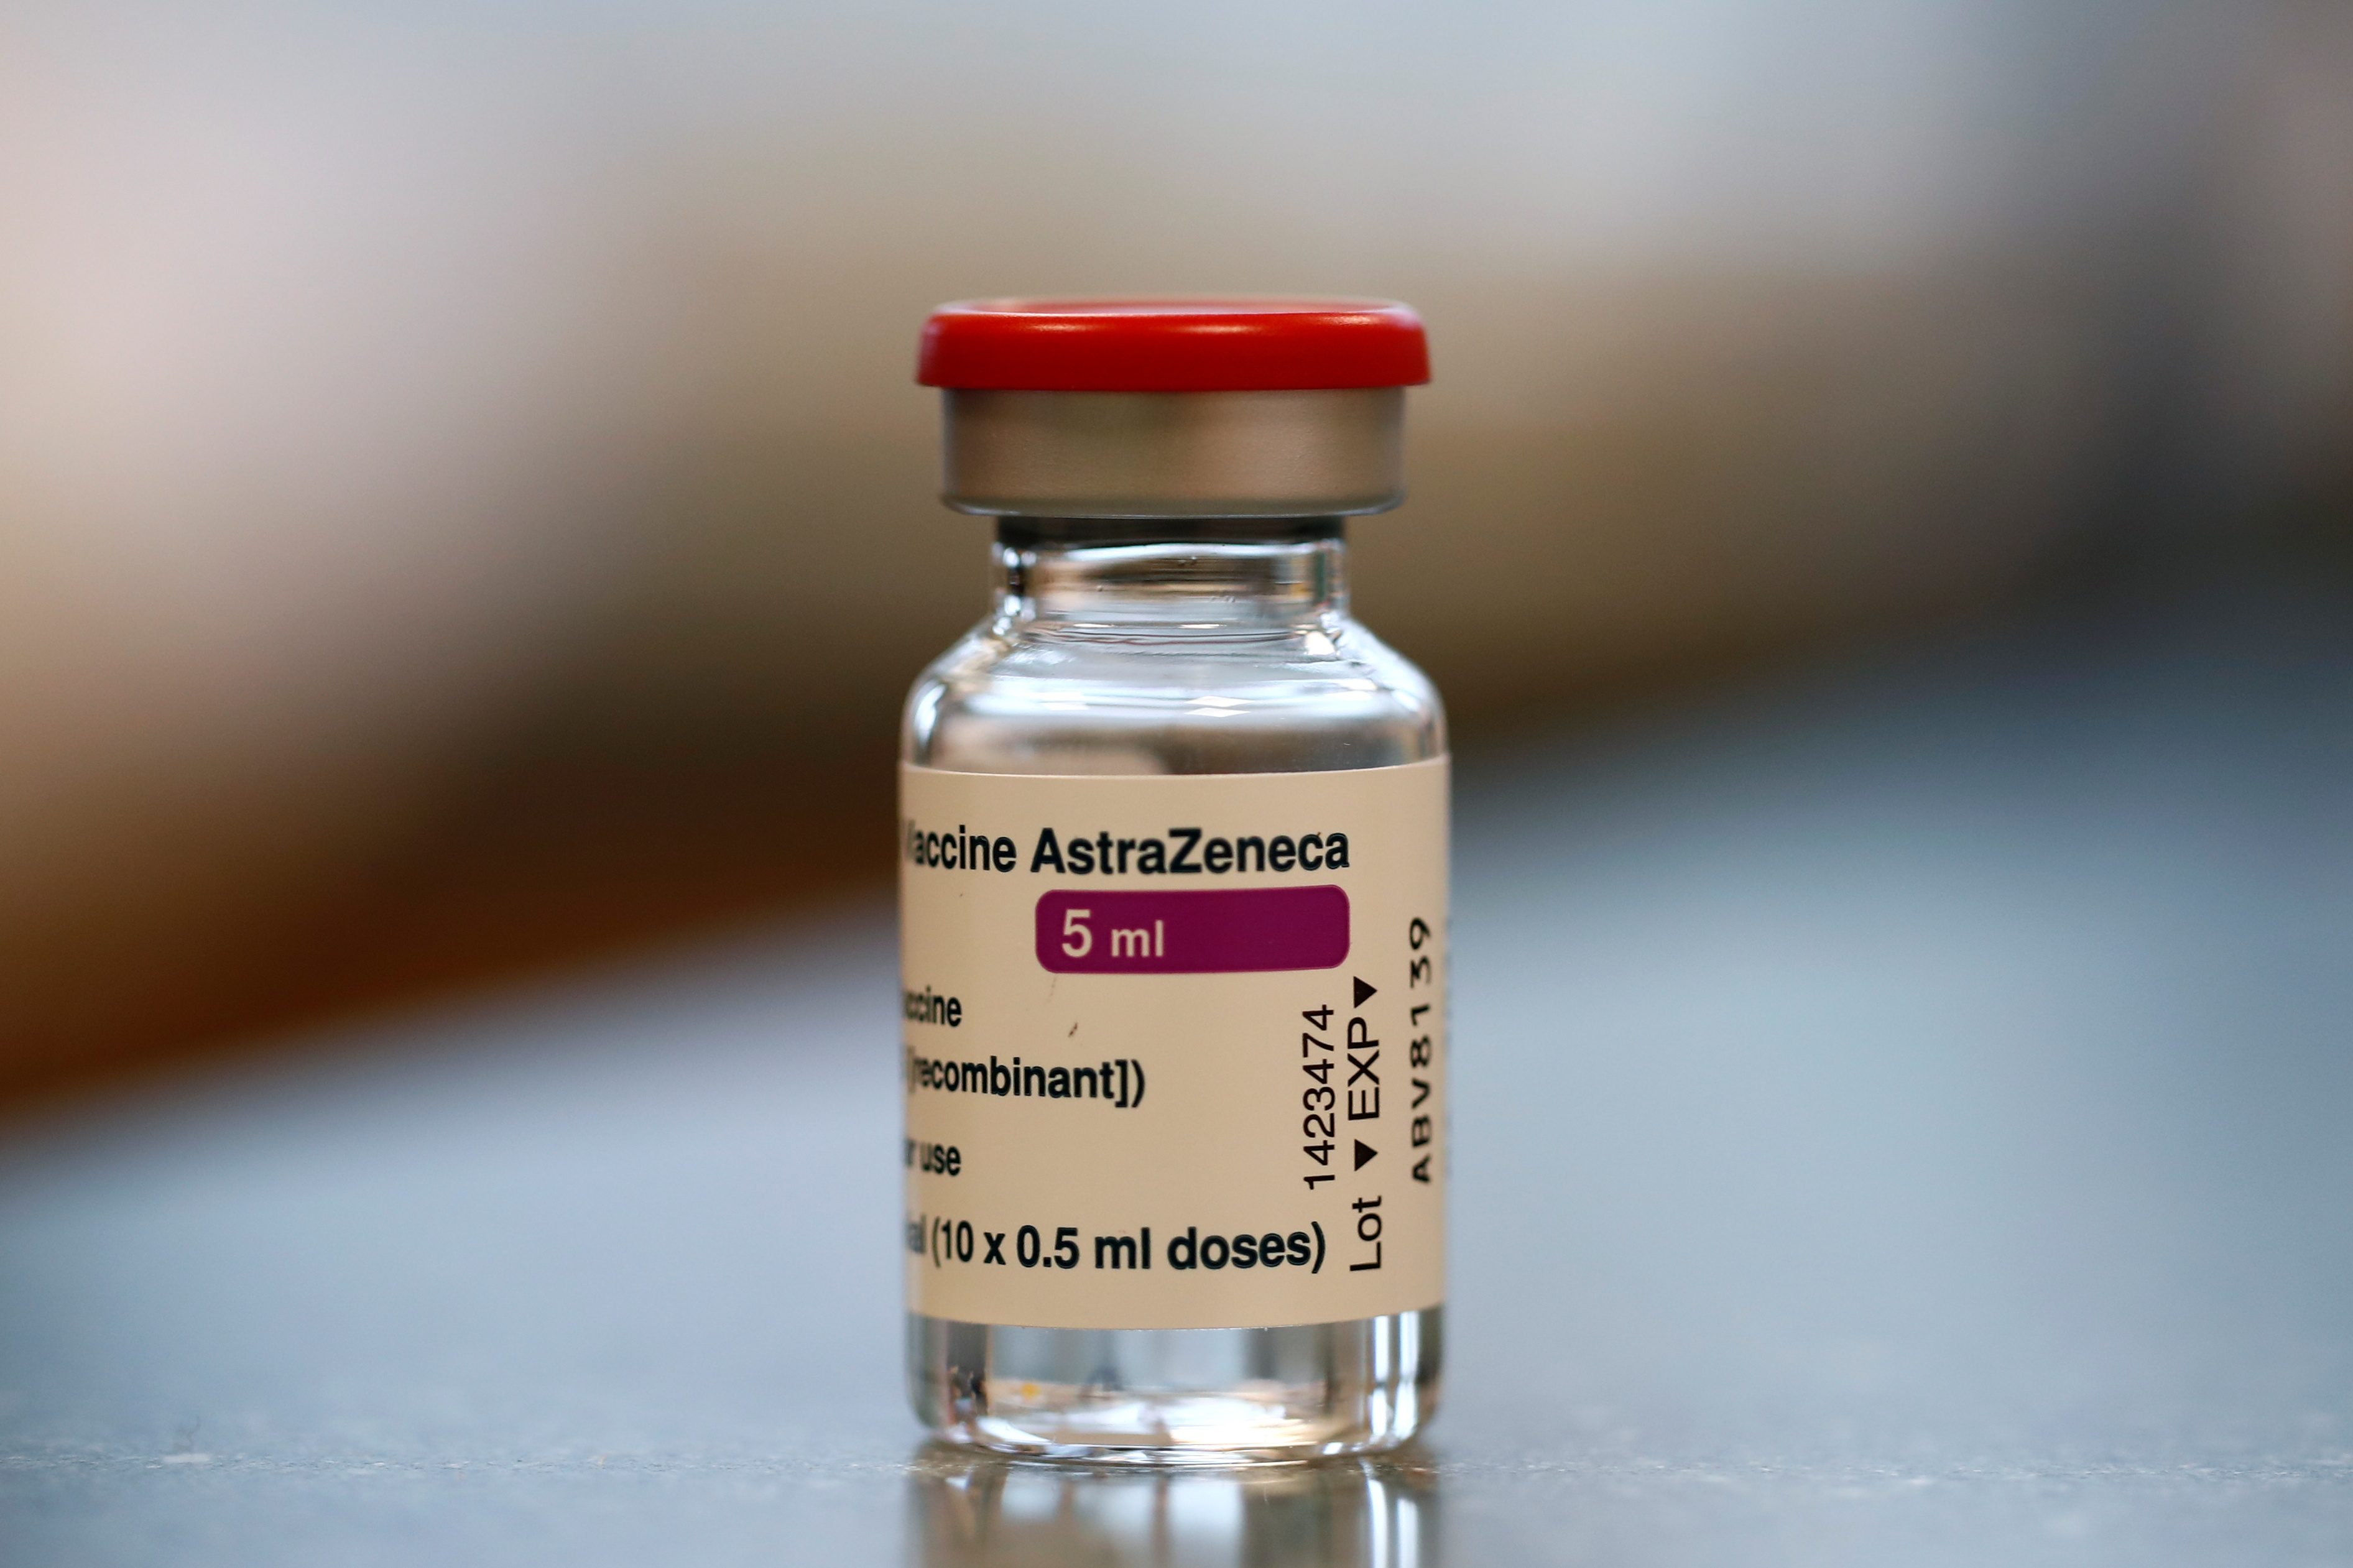 U.S. may not need AstraZeneca COVID-19 vaccine – Fauci